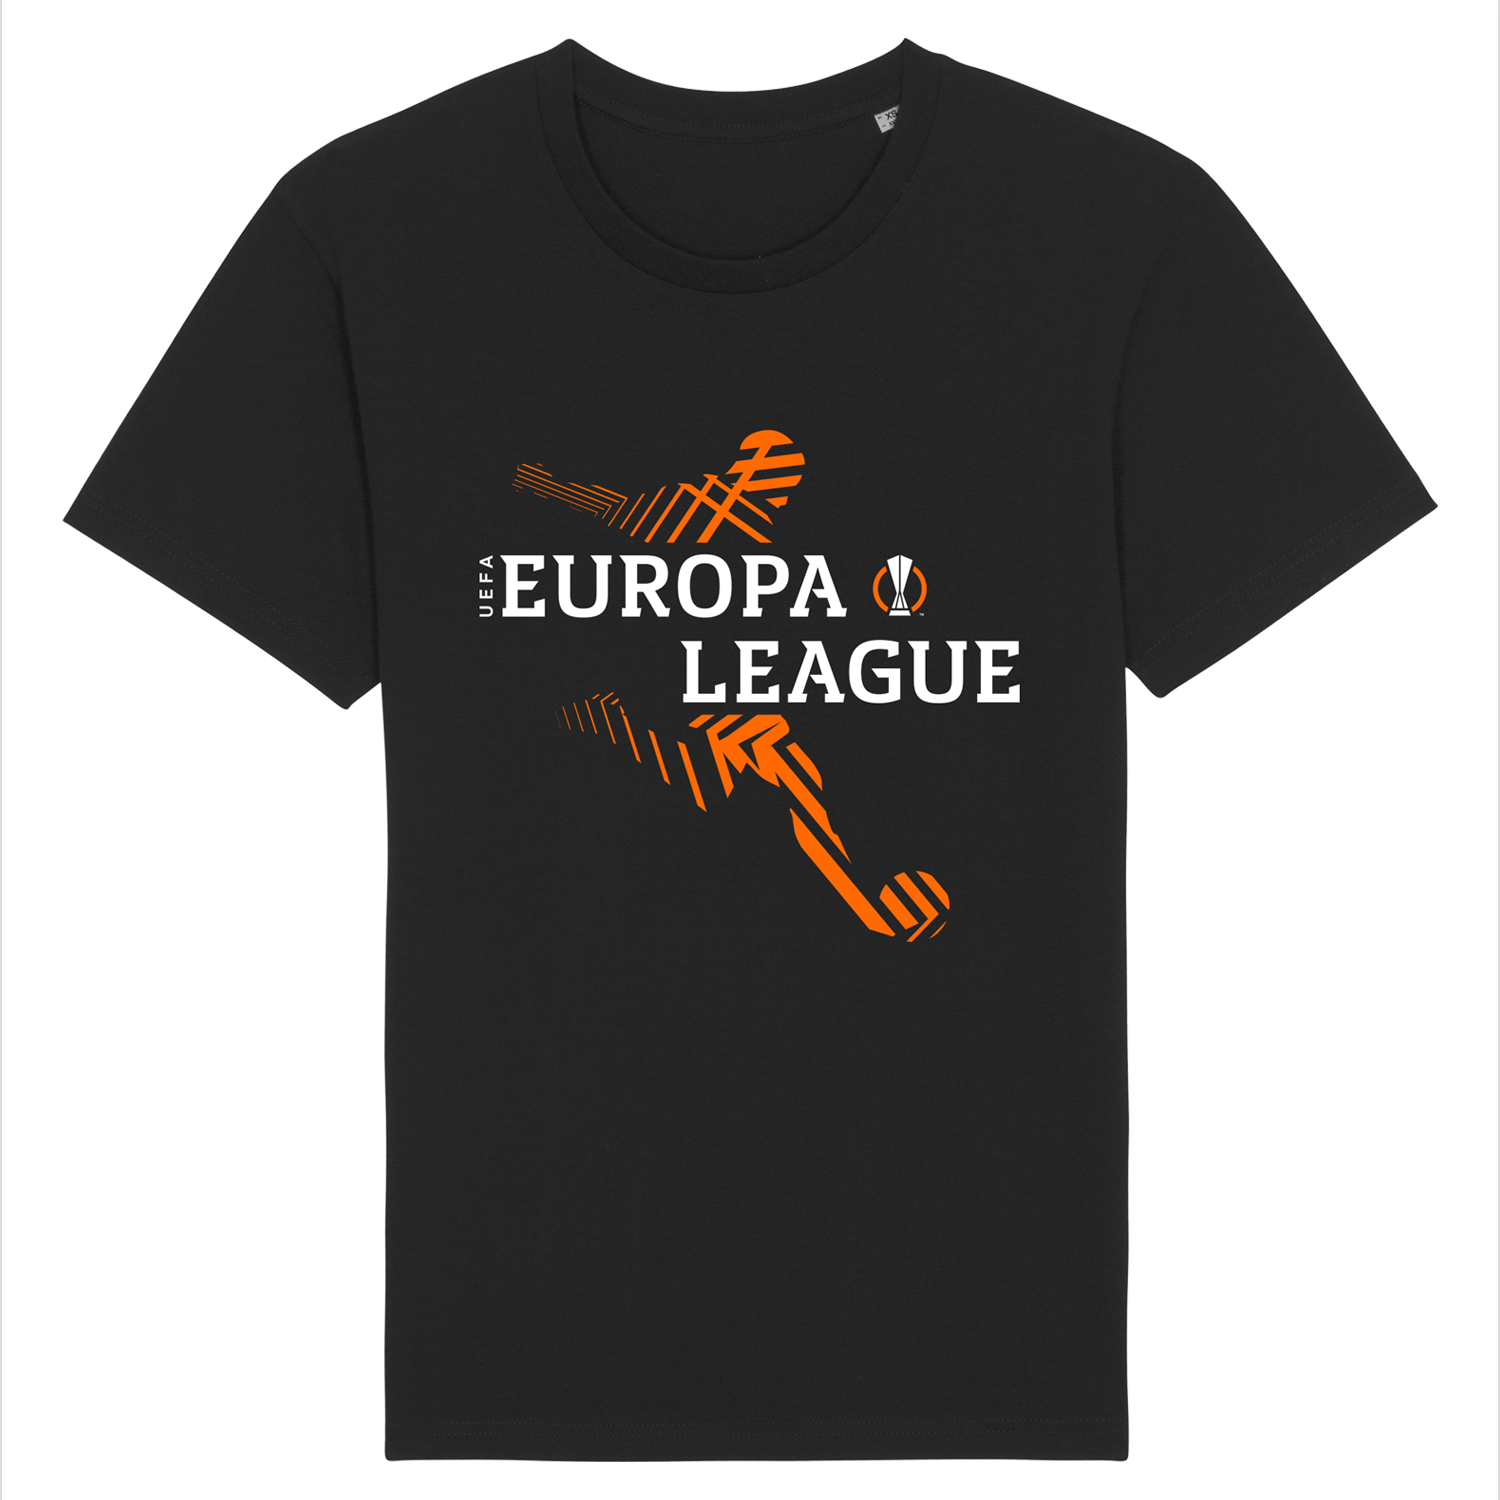 UEFA Europa League - Urban Player Black T-Shirt UEFA Club Competitions Online Store